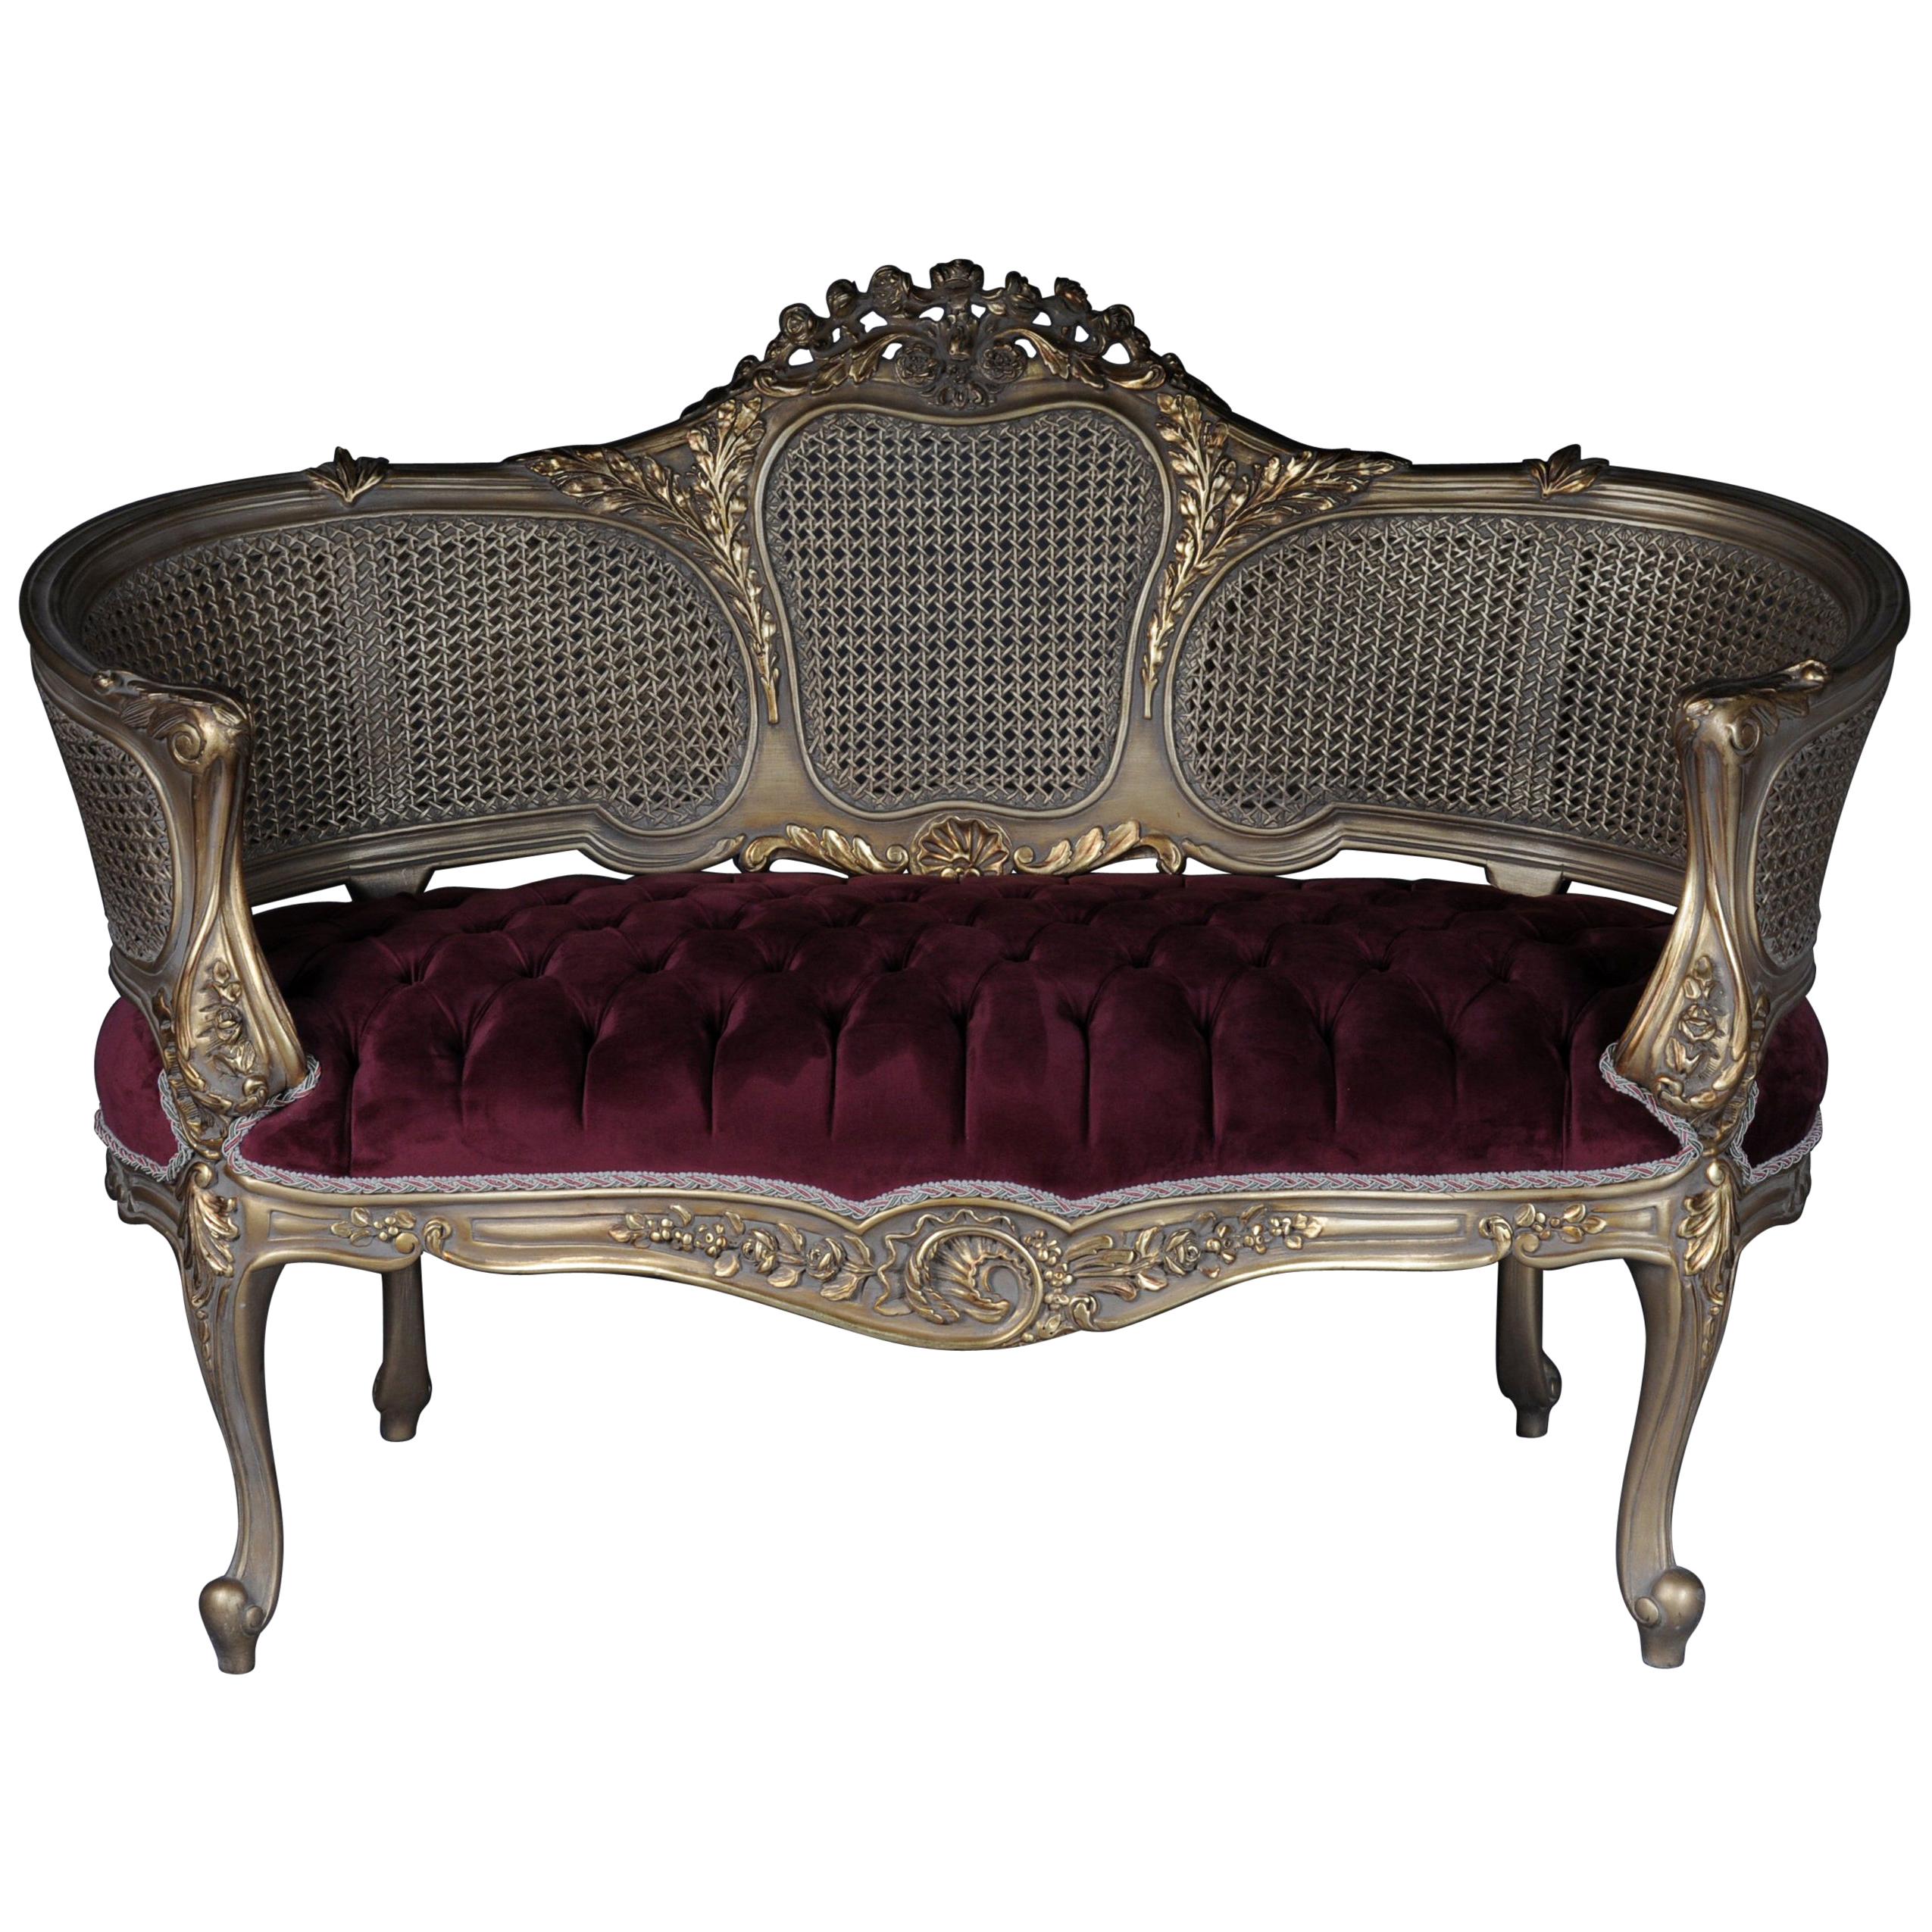 Hübsche barocke Bank, Sofa im Louis-XV-Stil